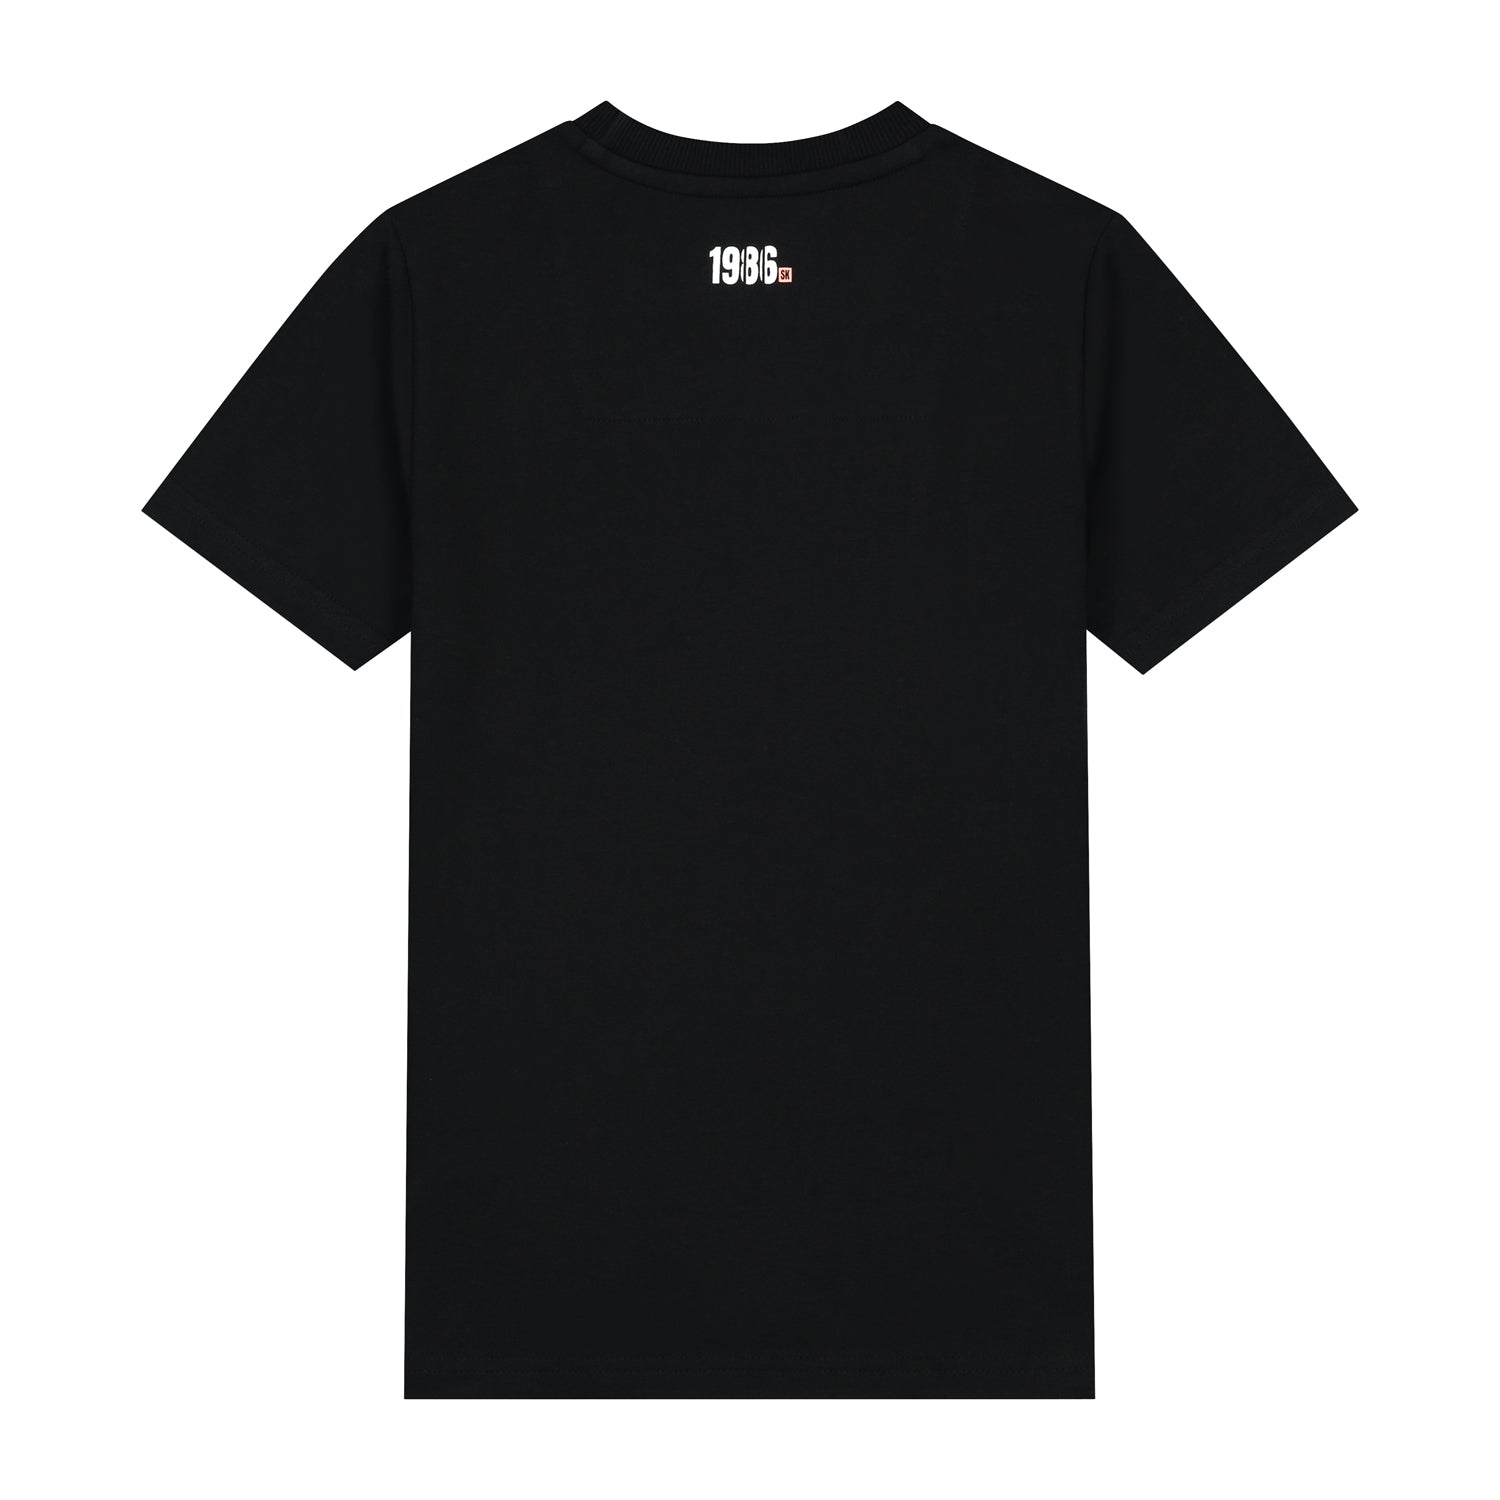 Skurk T-shirt Tafari Black